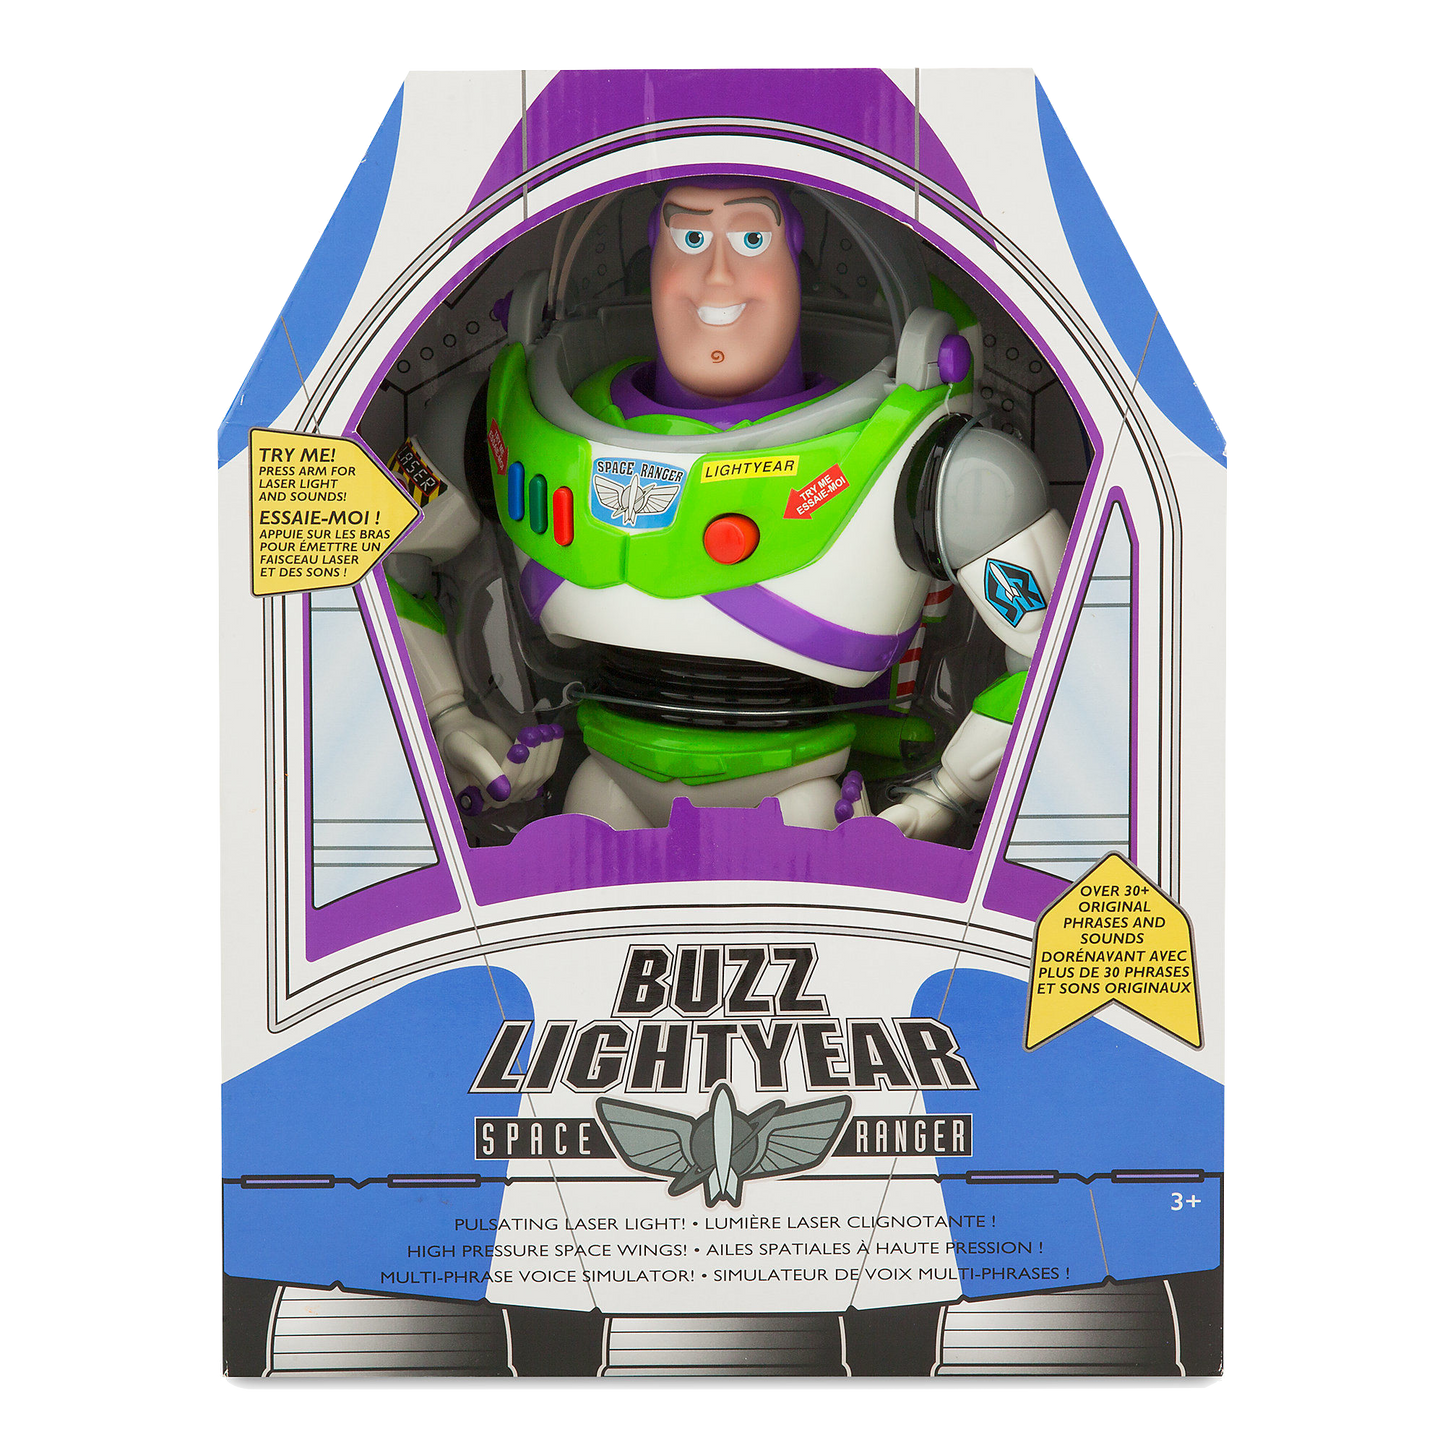 Toy Story Buzz Lightyear Original Talking Doll Buzz Lightyear pop - Interactivo 